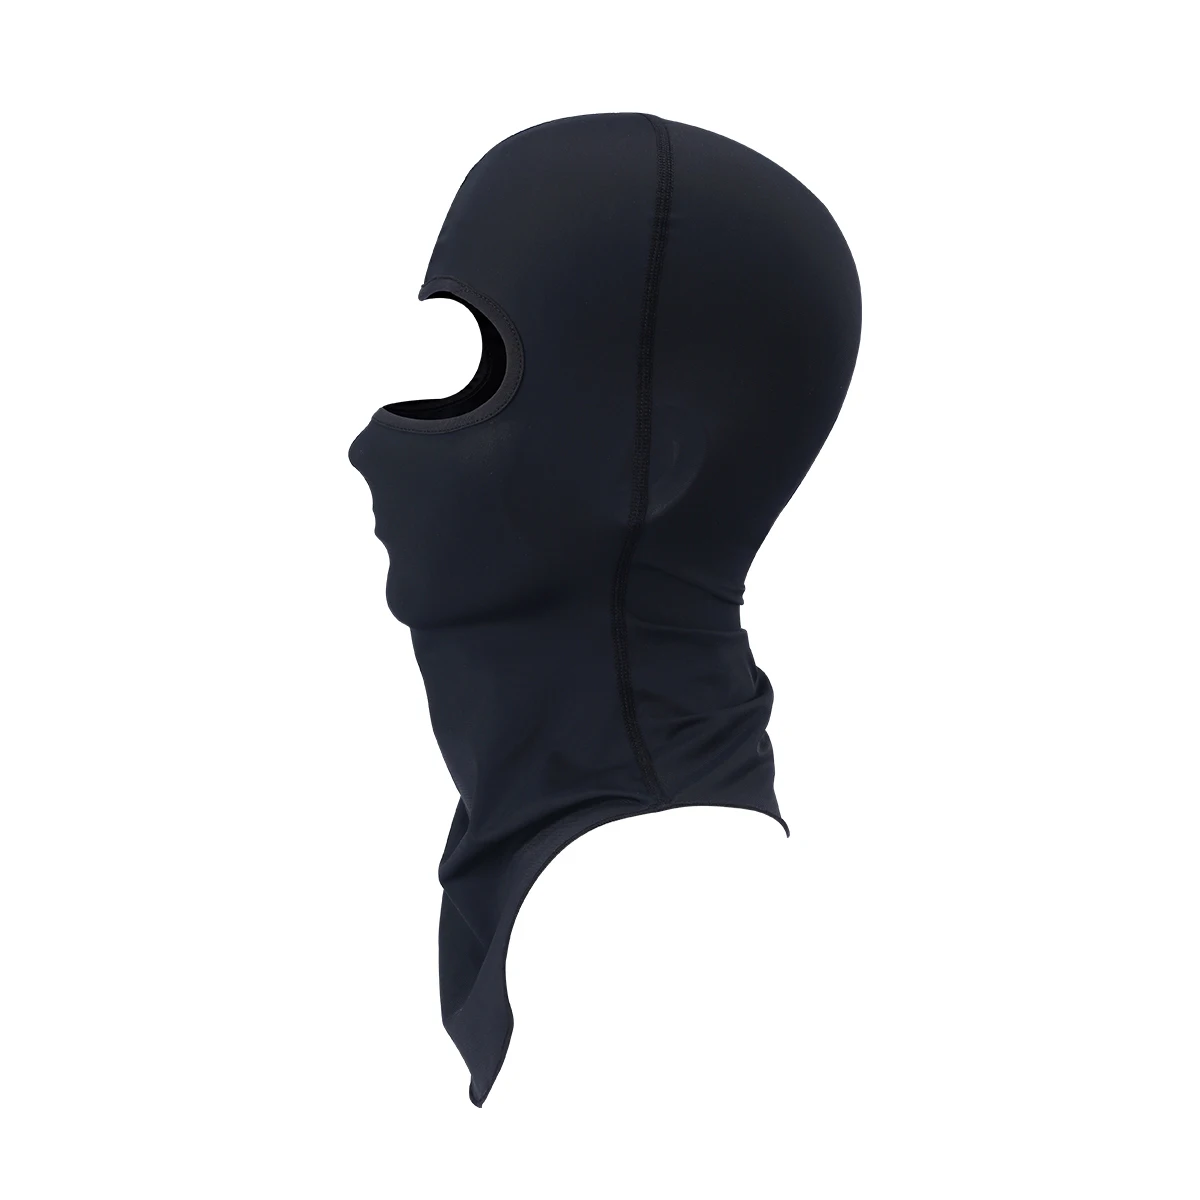 Маска для мотоцикла HEROBIKER, Балаклава, маска для лица, байкер, мотоцикл, теплые солнцезащитные защитные головные уборы, маска для лица, мотоциклетная маска